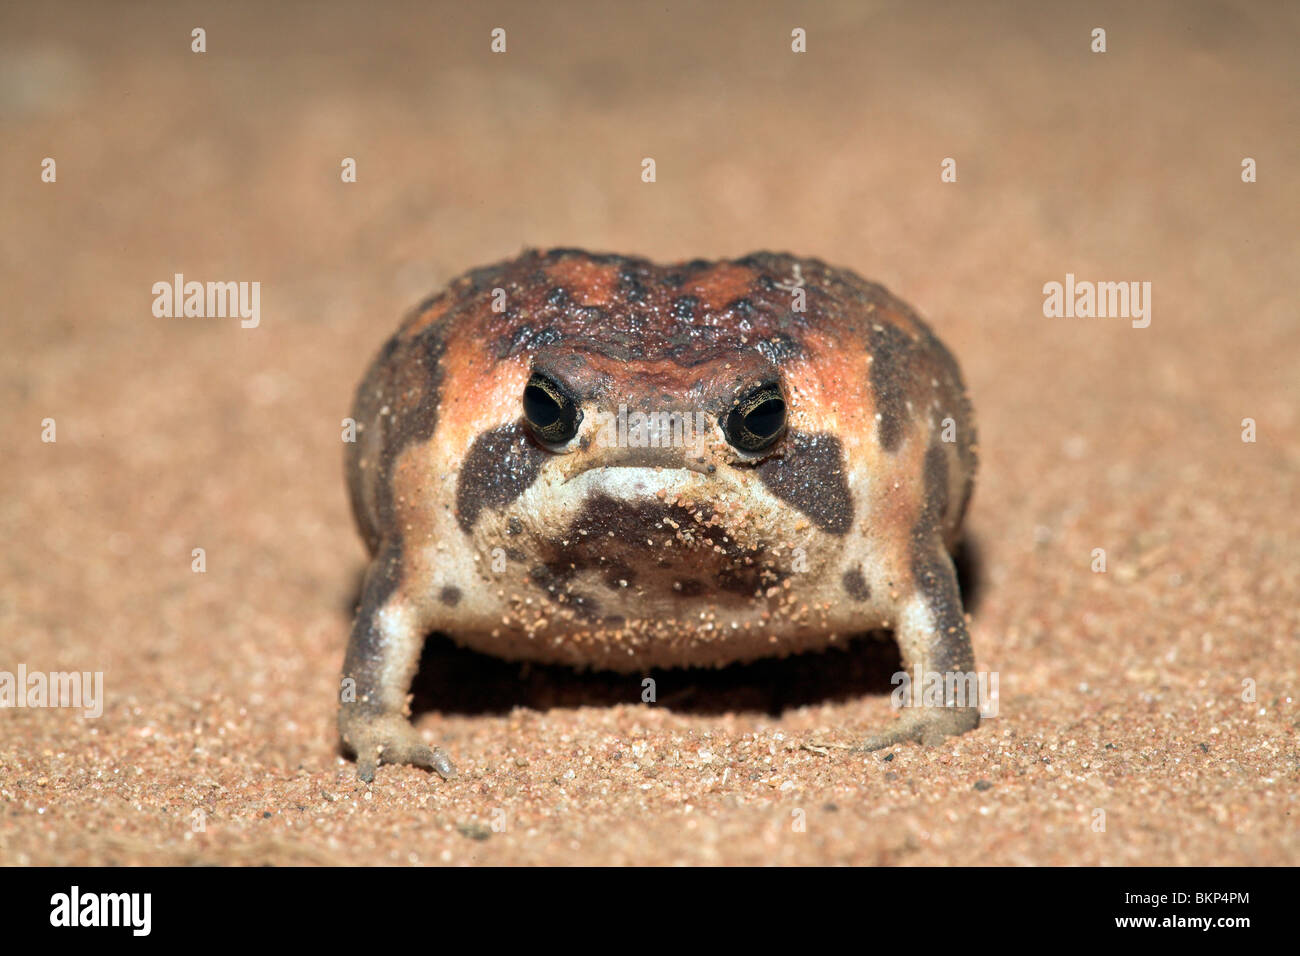 photo of a bushveld rainfrog on sand (taken at night) Stock Photo